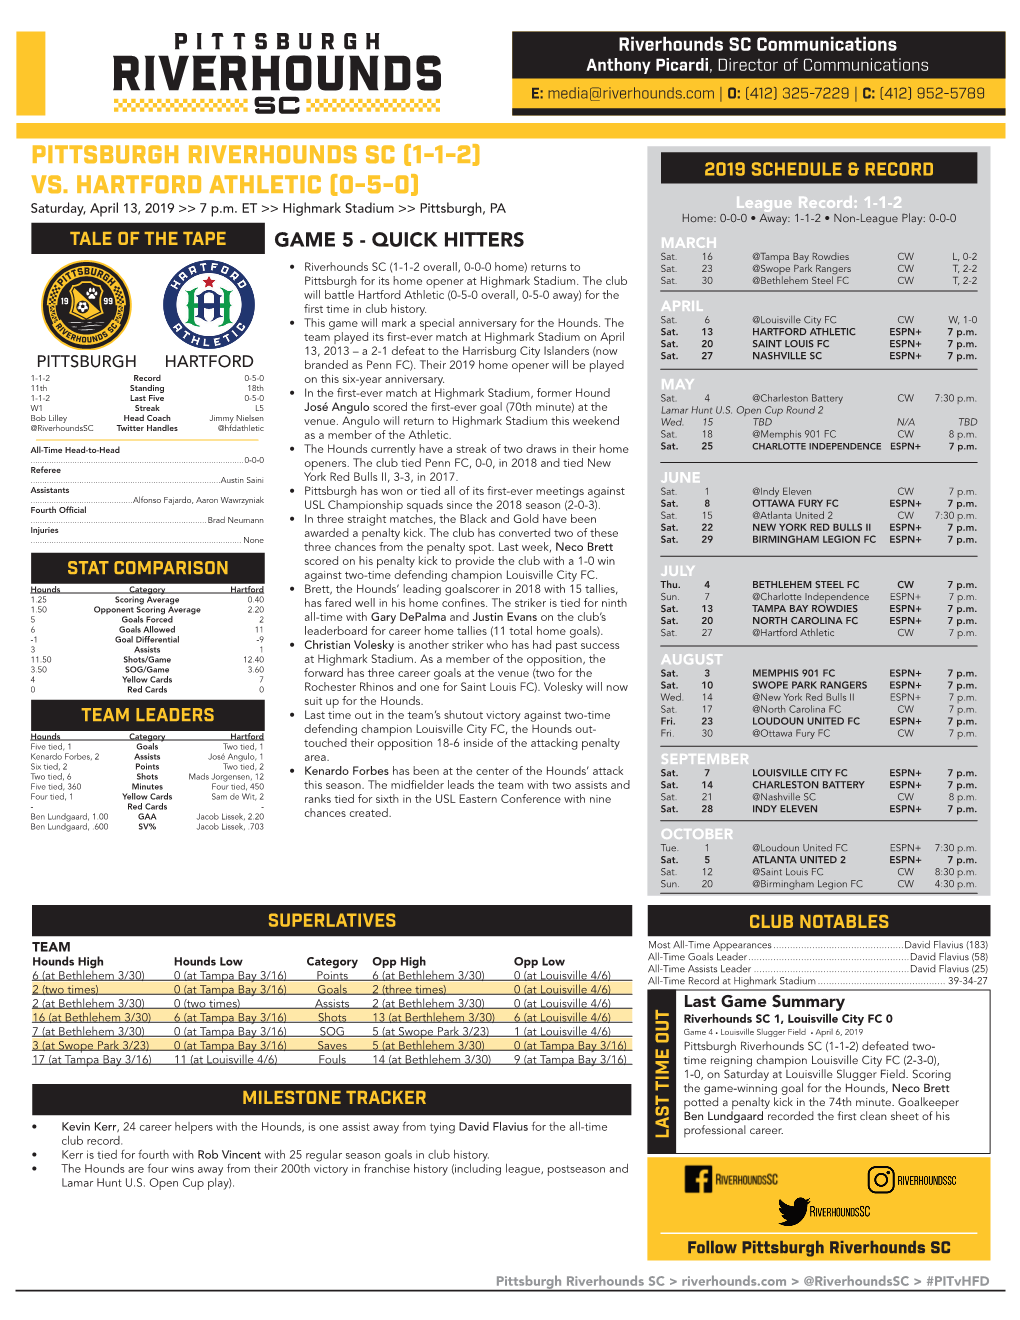 Pittsburgh Riverhounds Sc (1-1-2) 2019 Schedule & Record Vs